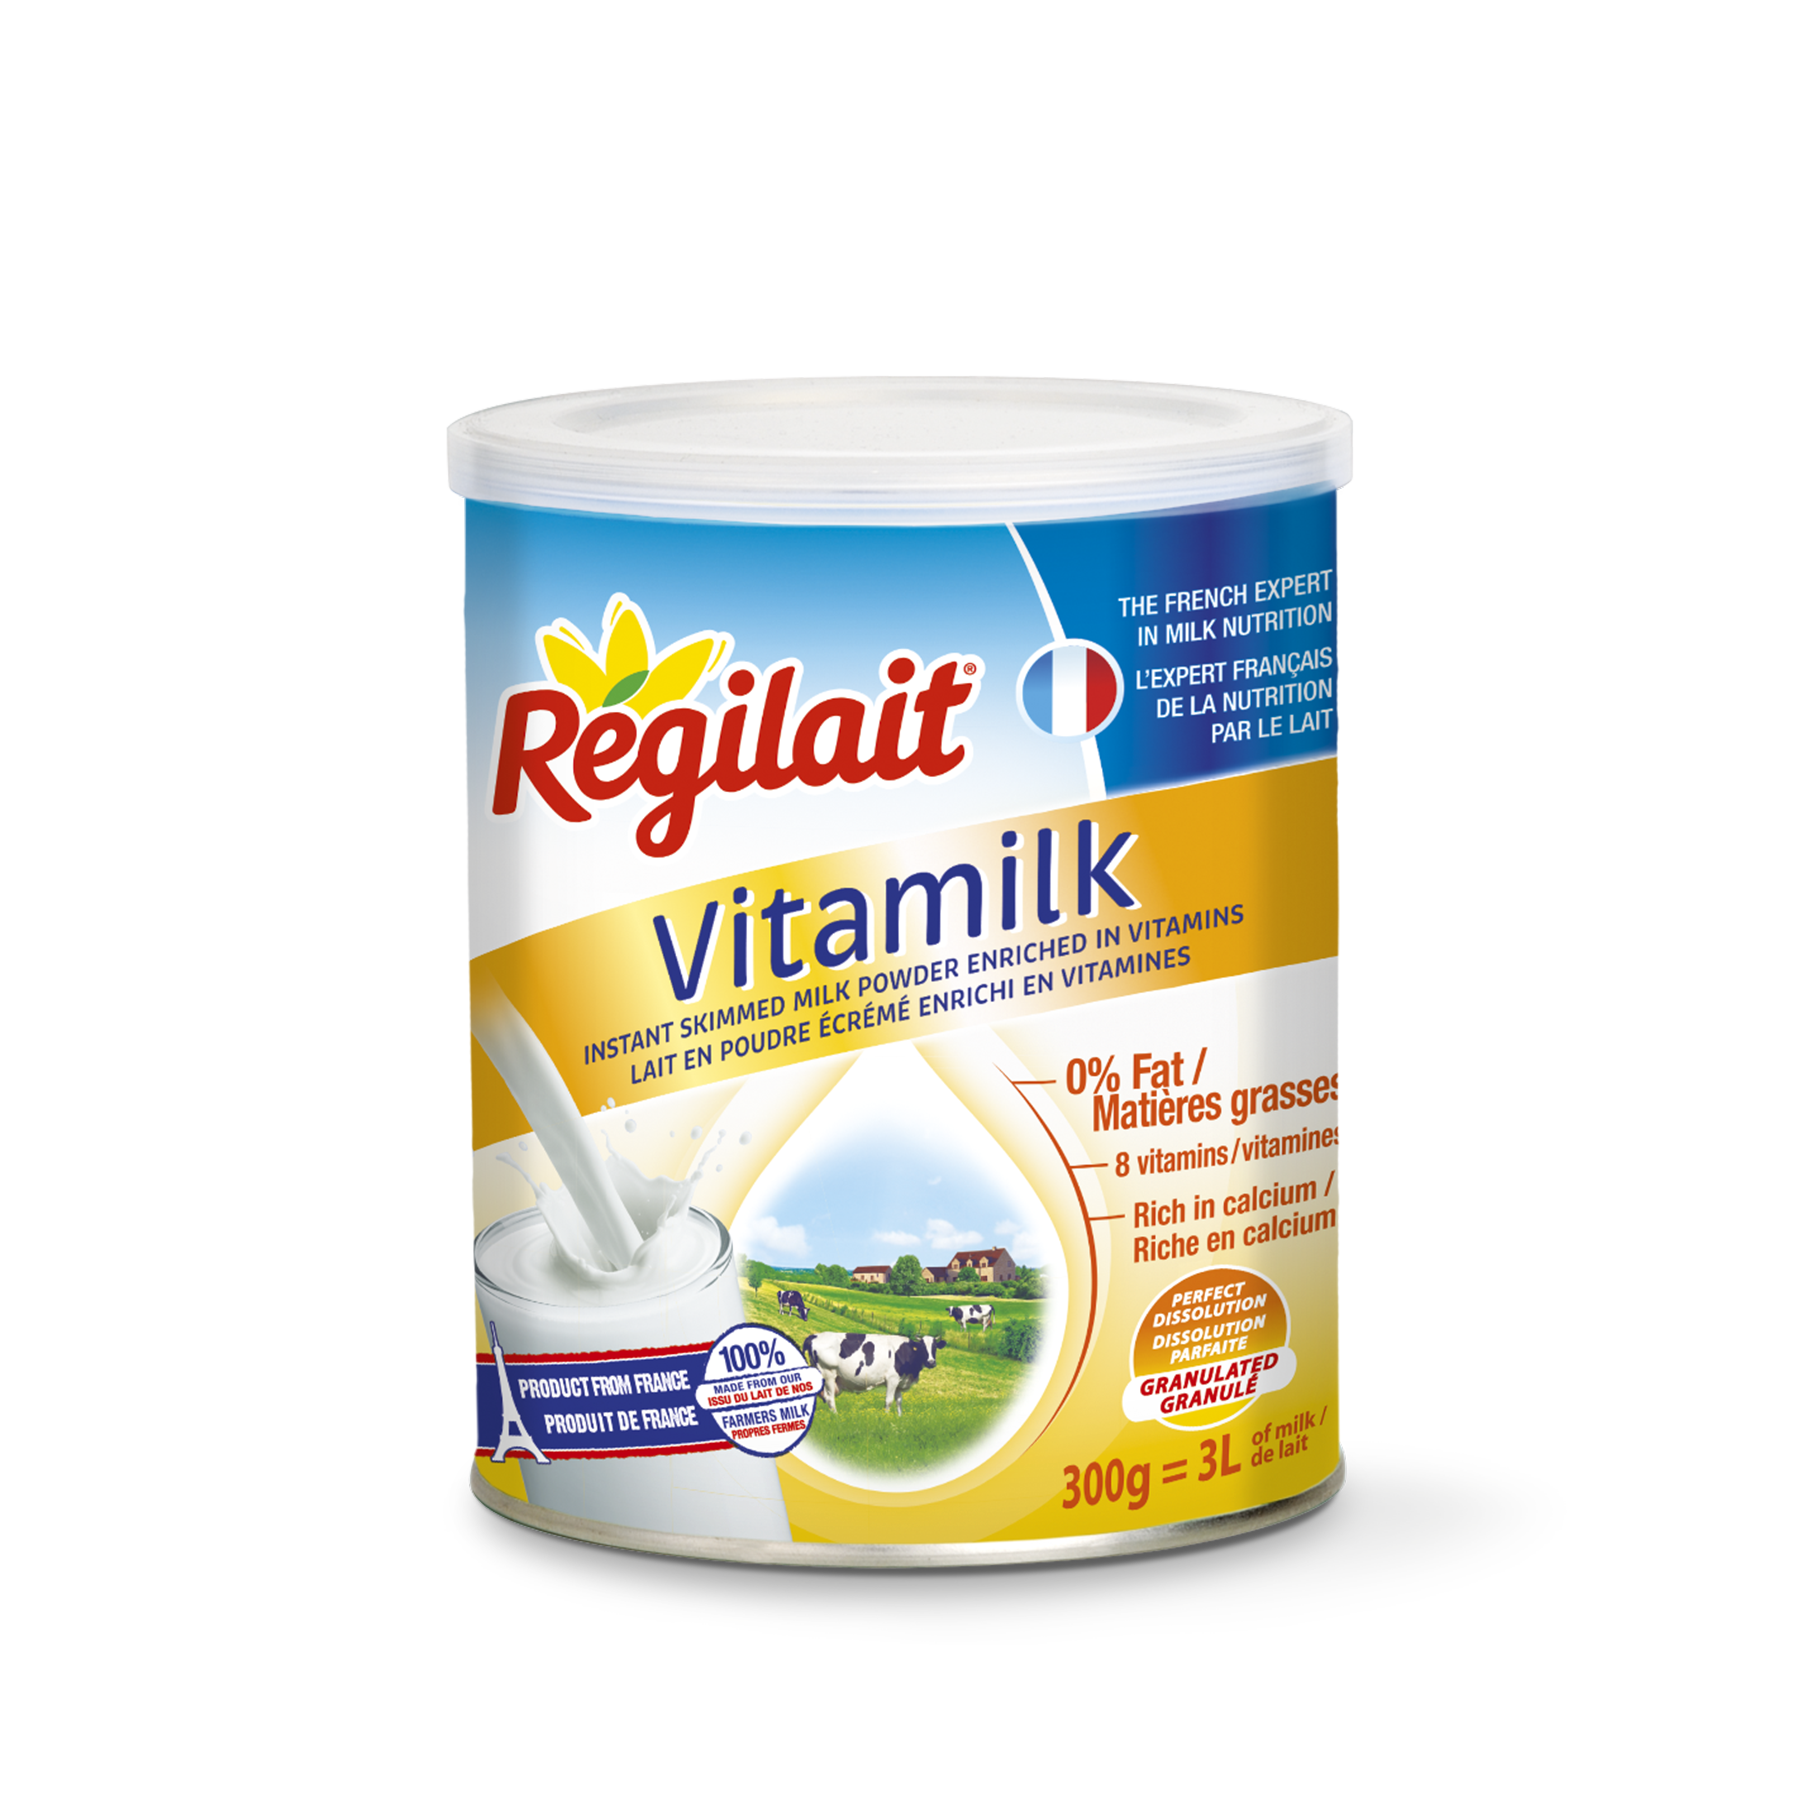 Does Vitamilk make you gain weight